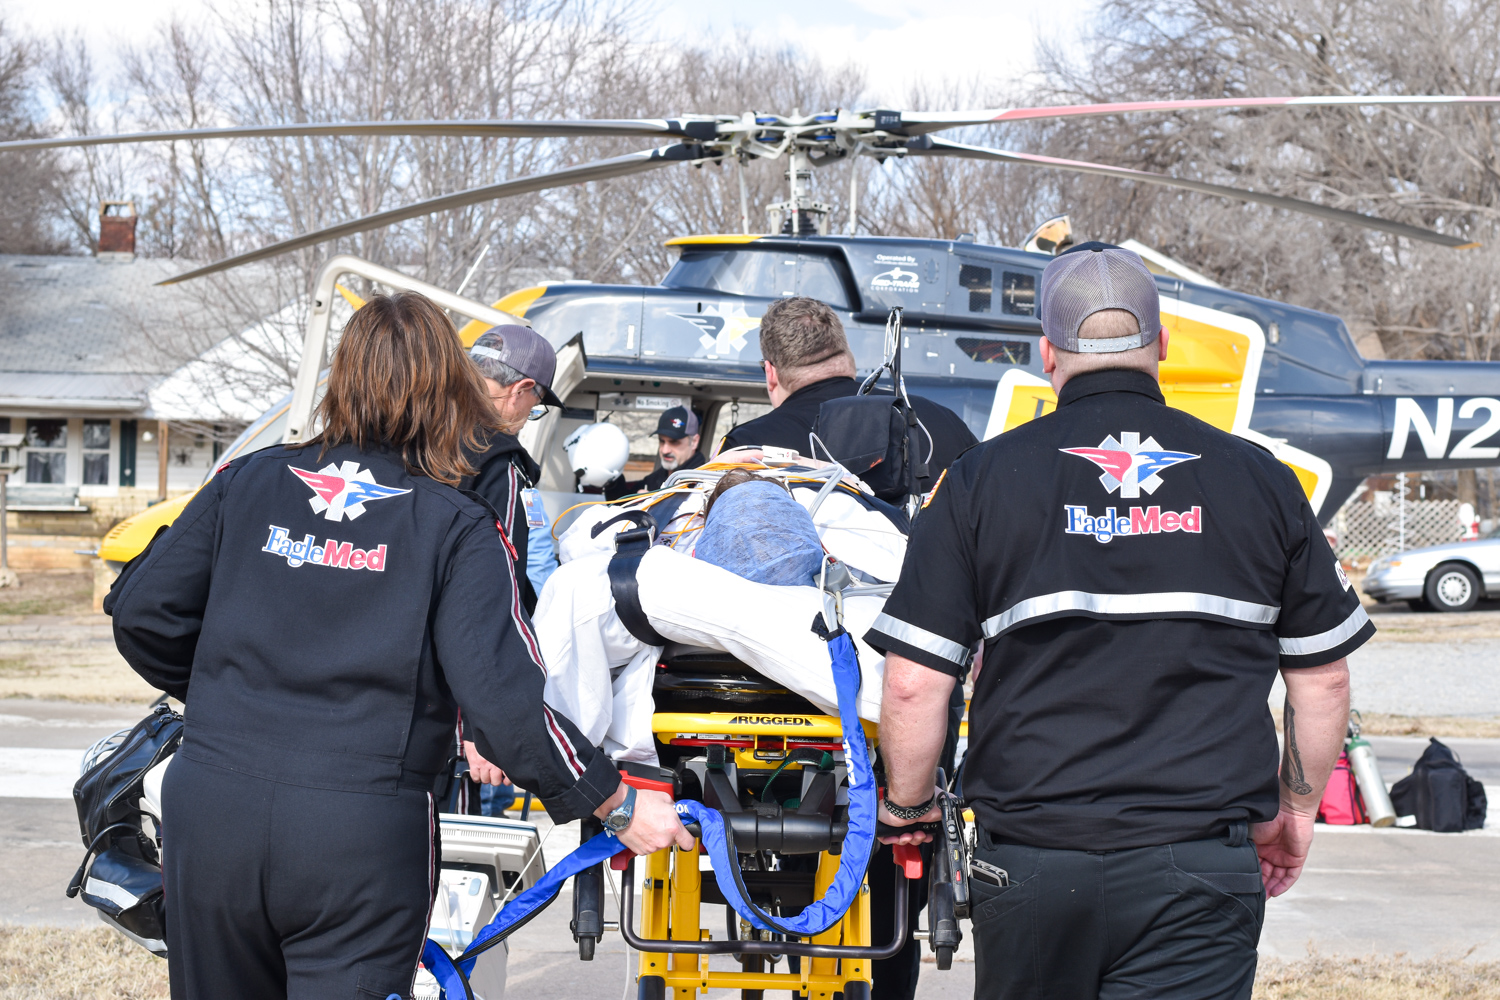 The EagleMed crew heads toward the helipad during the dry run on January 9 at William Newton Hospital.